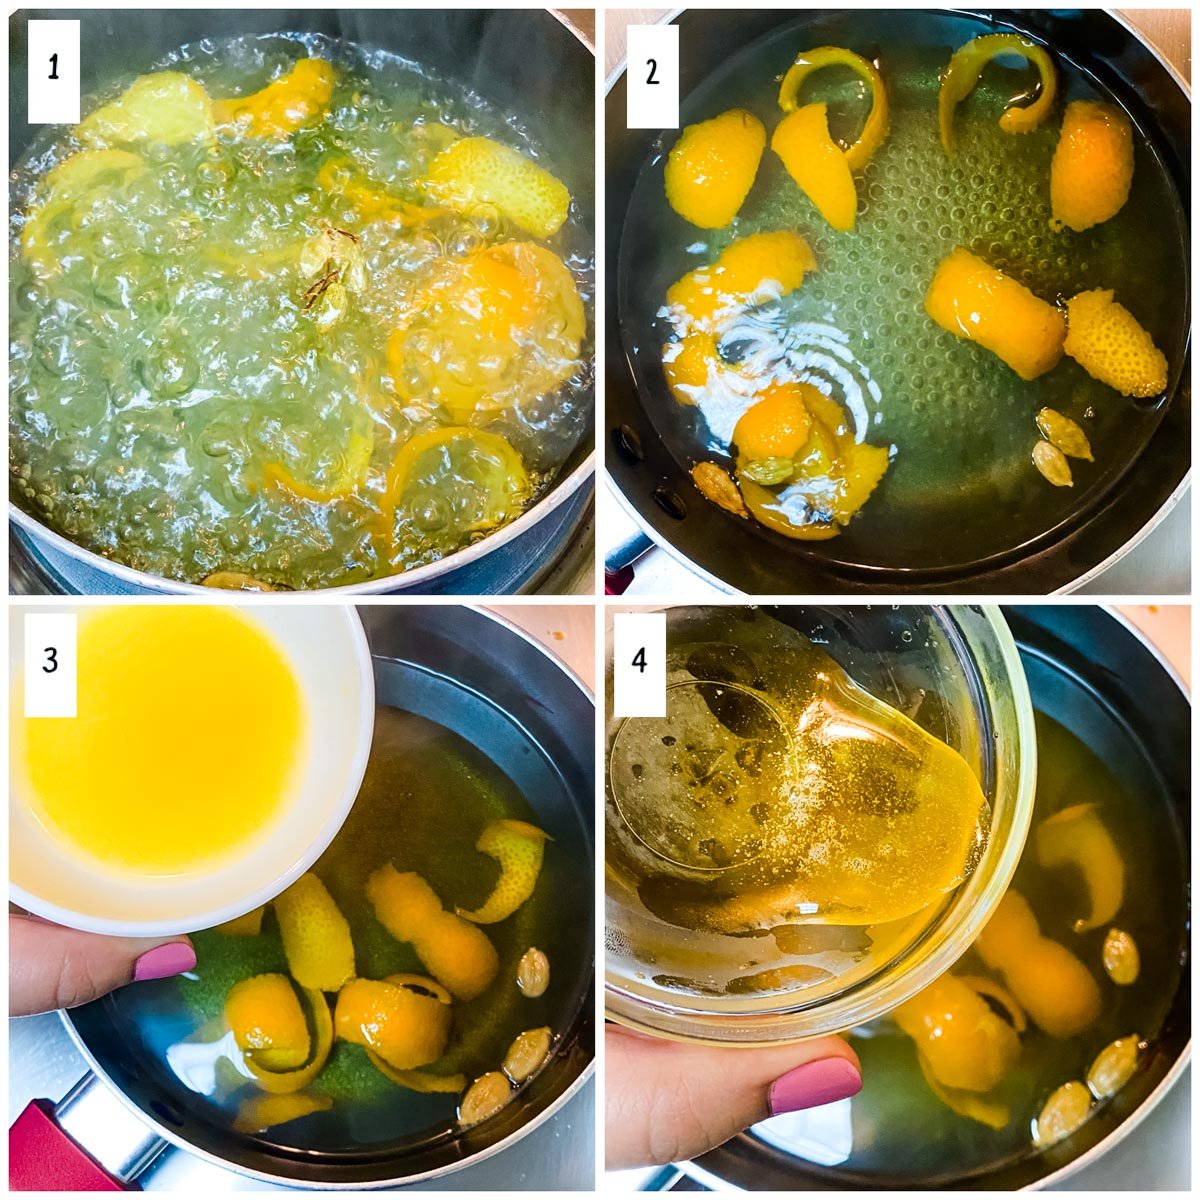 How to make tea with fresh orange peel.